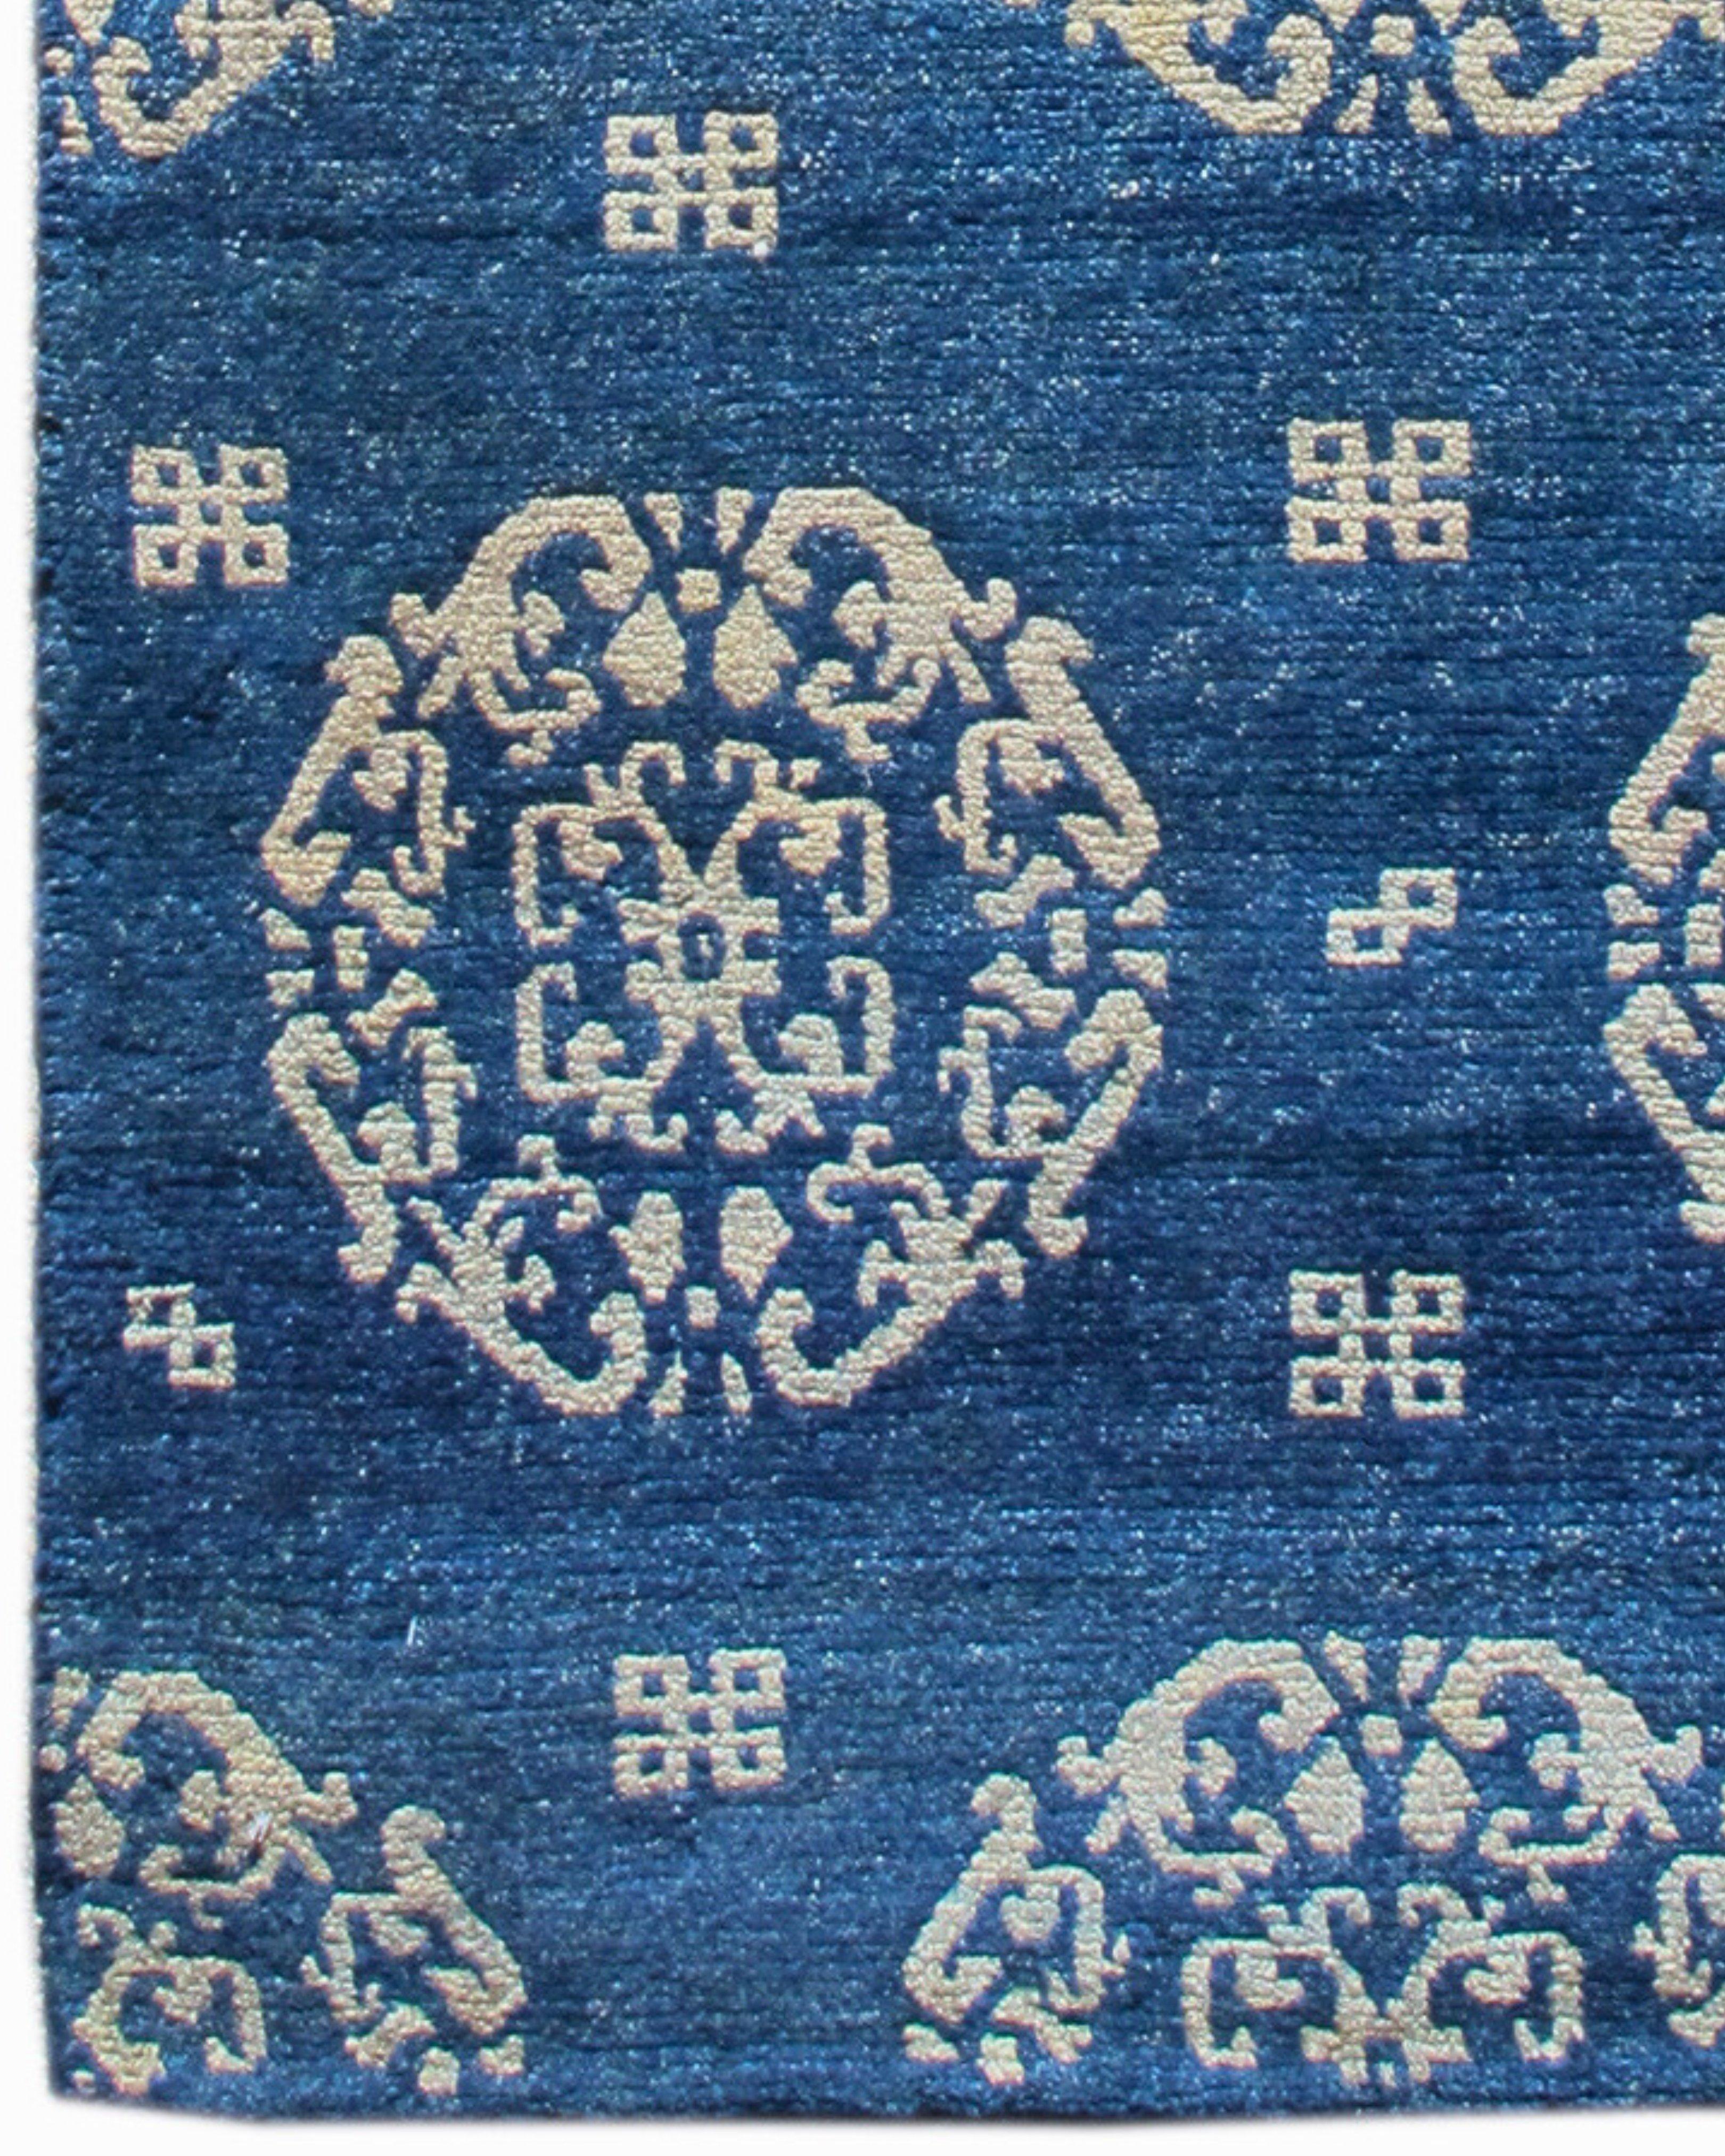 Wool Antique Blue-Indigo Tibetan Khaden Rug with Peonies, Late 19th Century For Sale